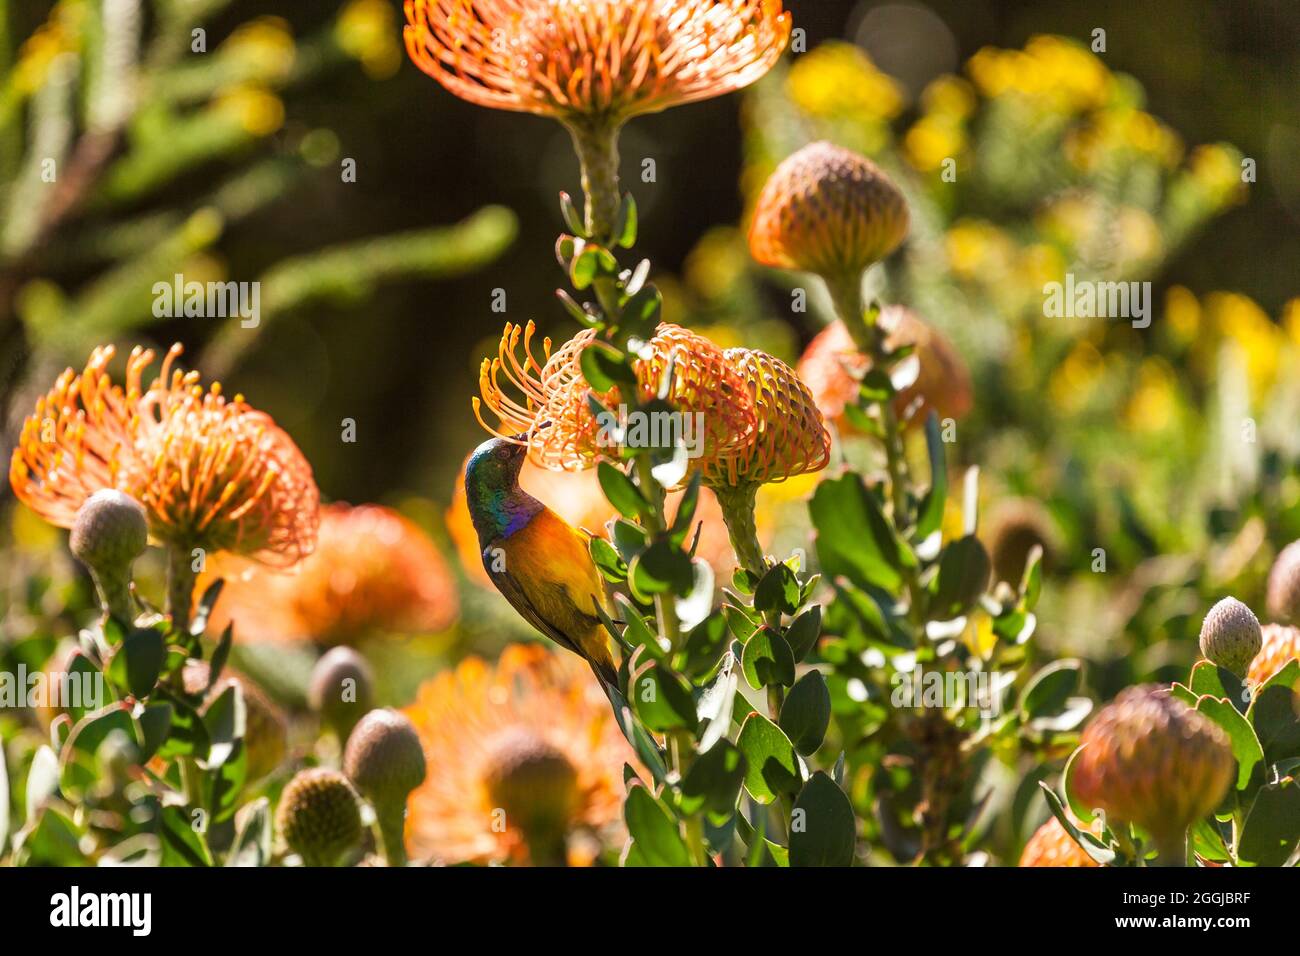 Orange-breasted sunbird on pincushion - Anthobaphes violacea on Leucospermum Stock Photo